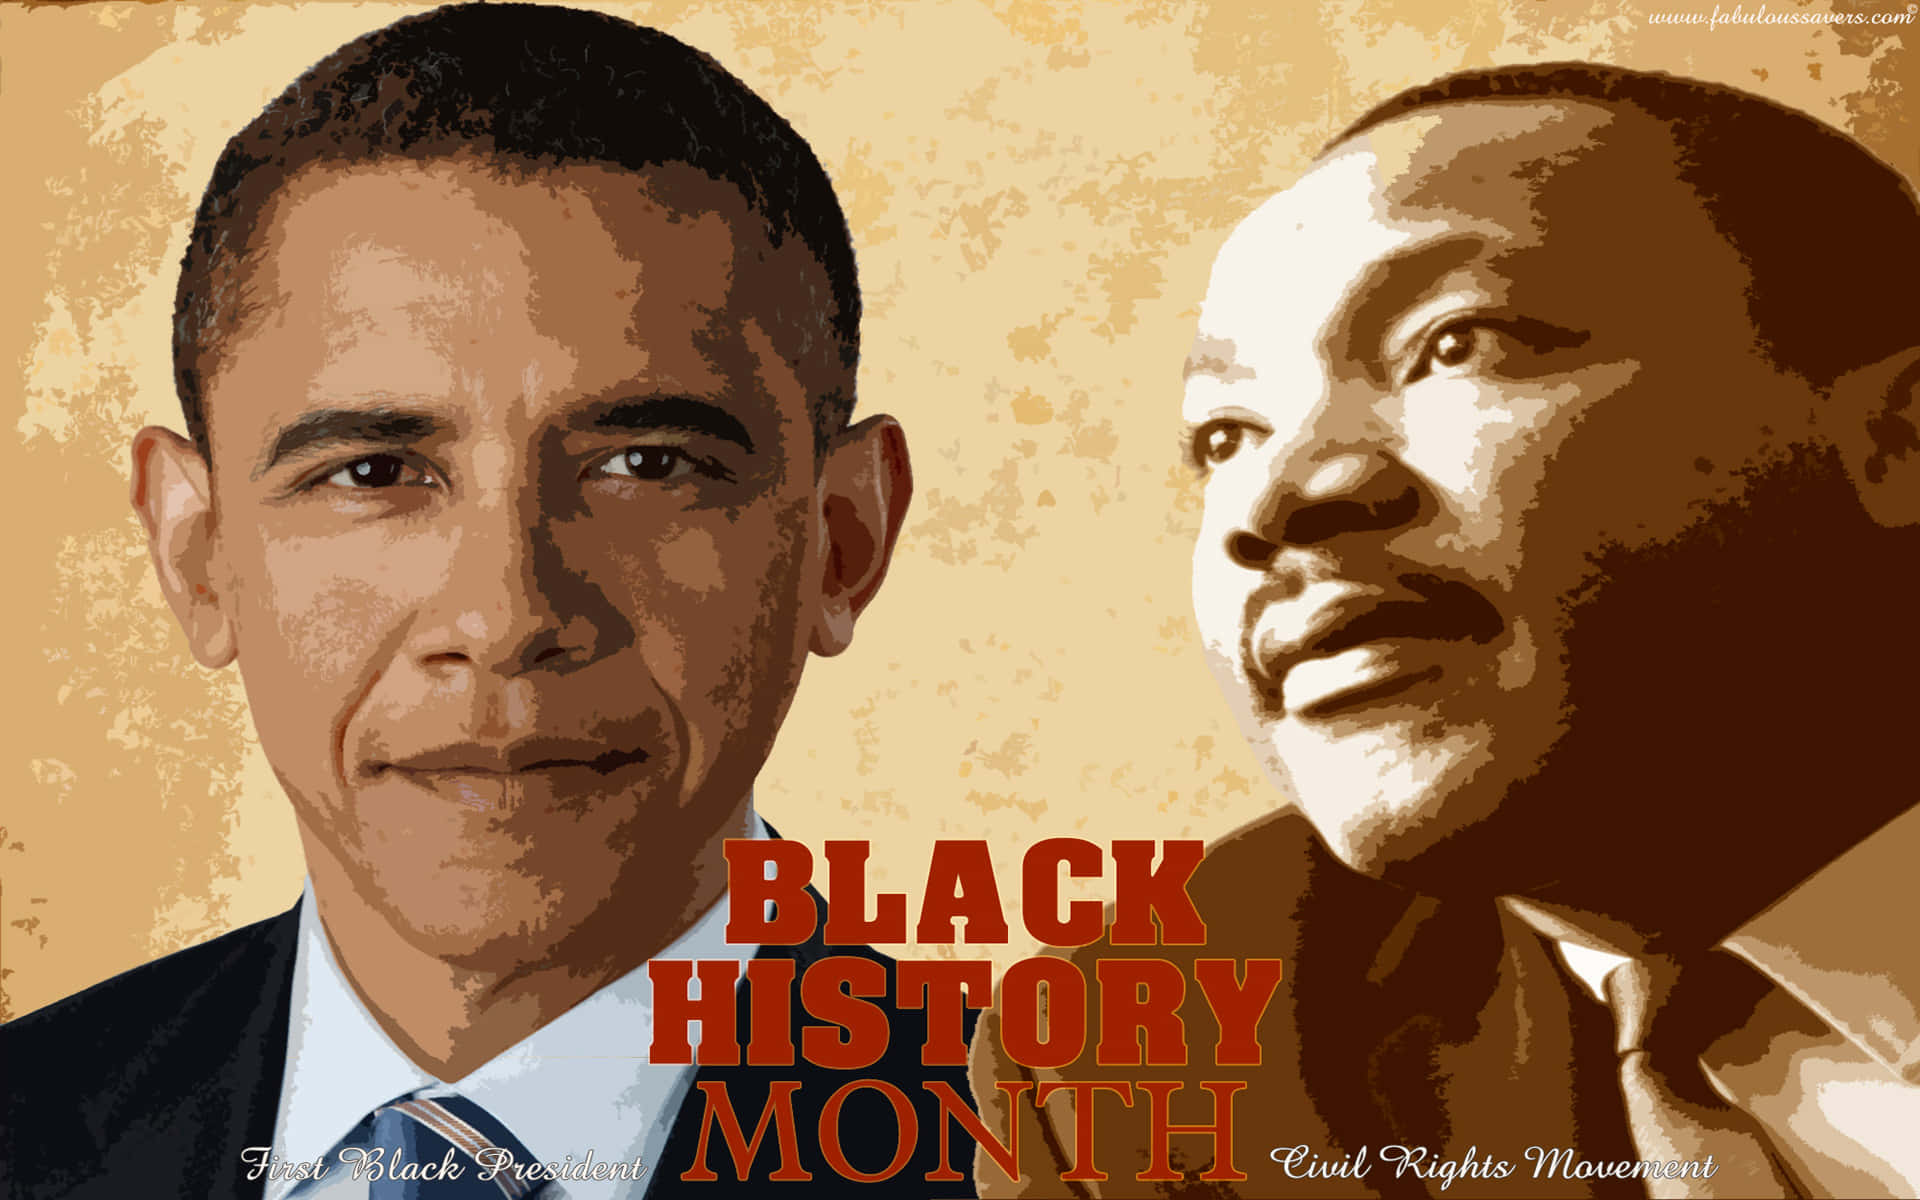 Black History Month Background Images  Free Download on Freepik